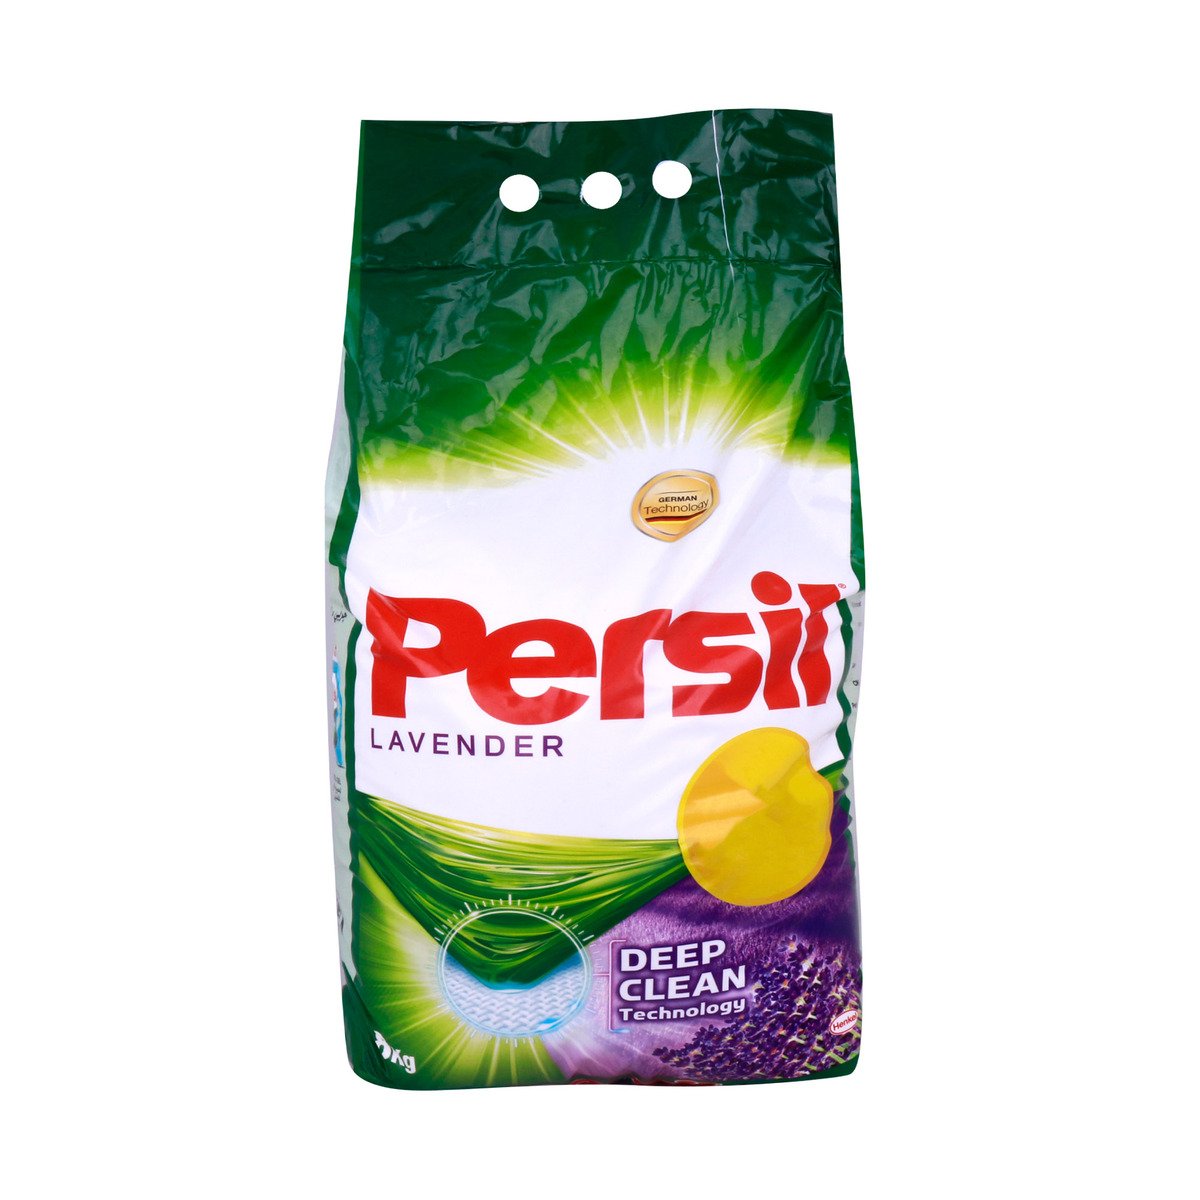 Persil Deep Clean Lavender Washing Powder Value Pack 8 kg